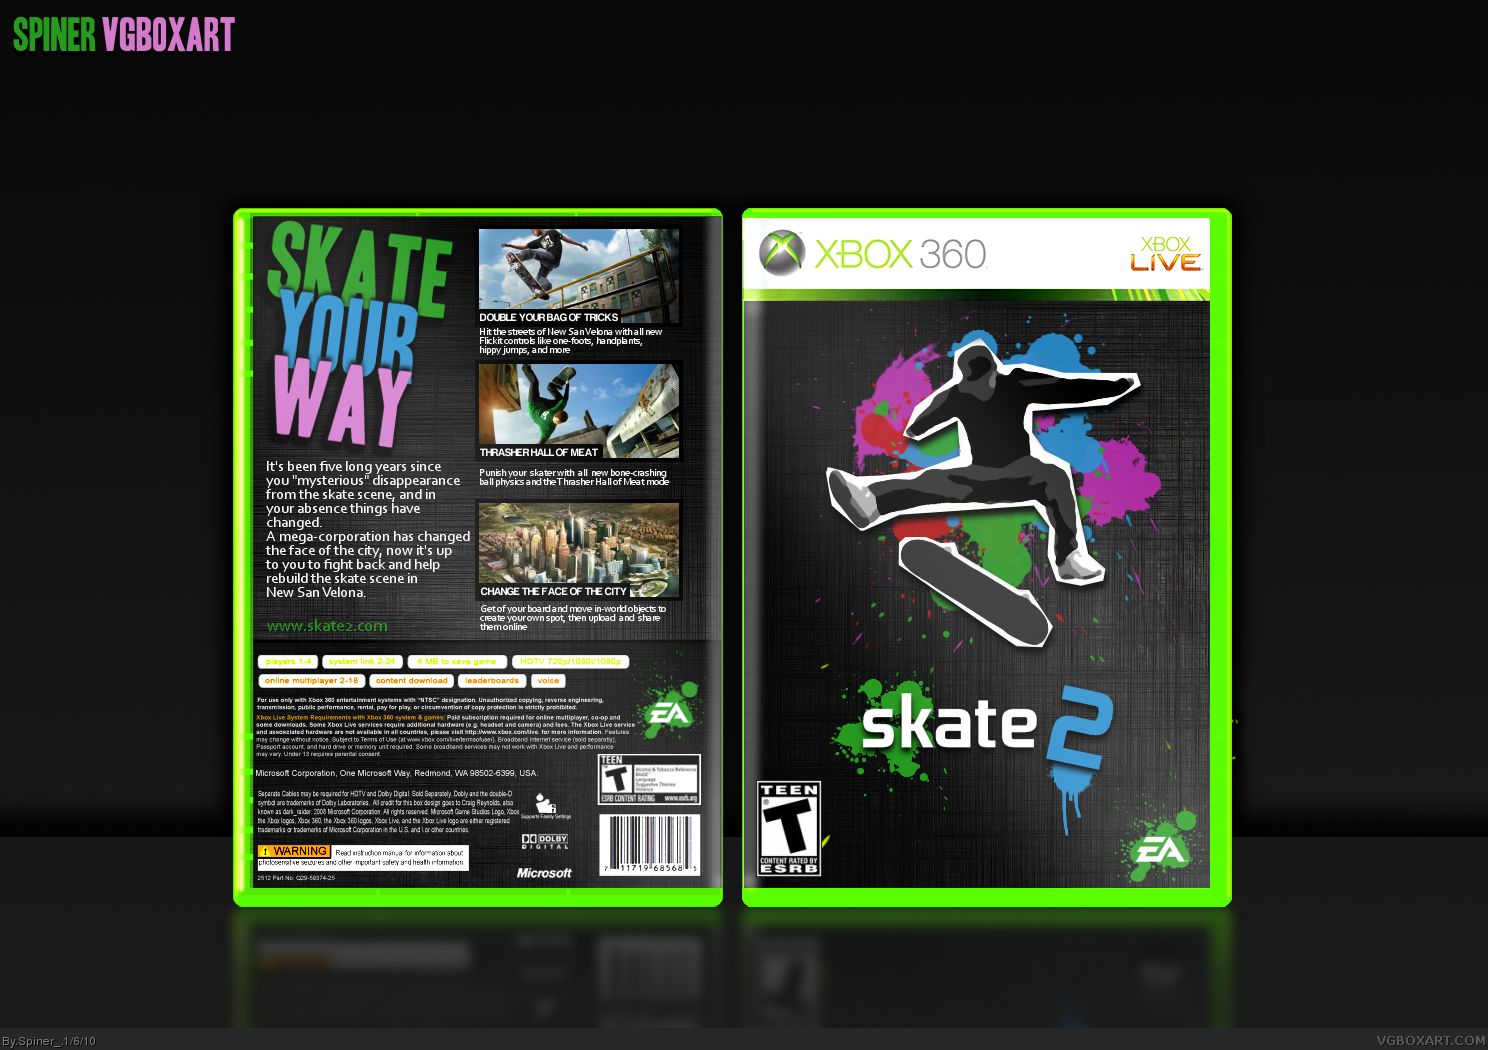 Skate 2 box cover